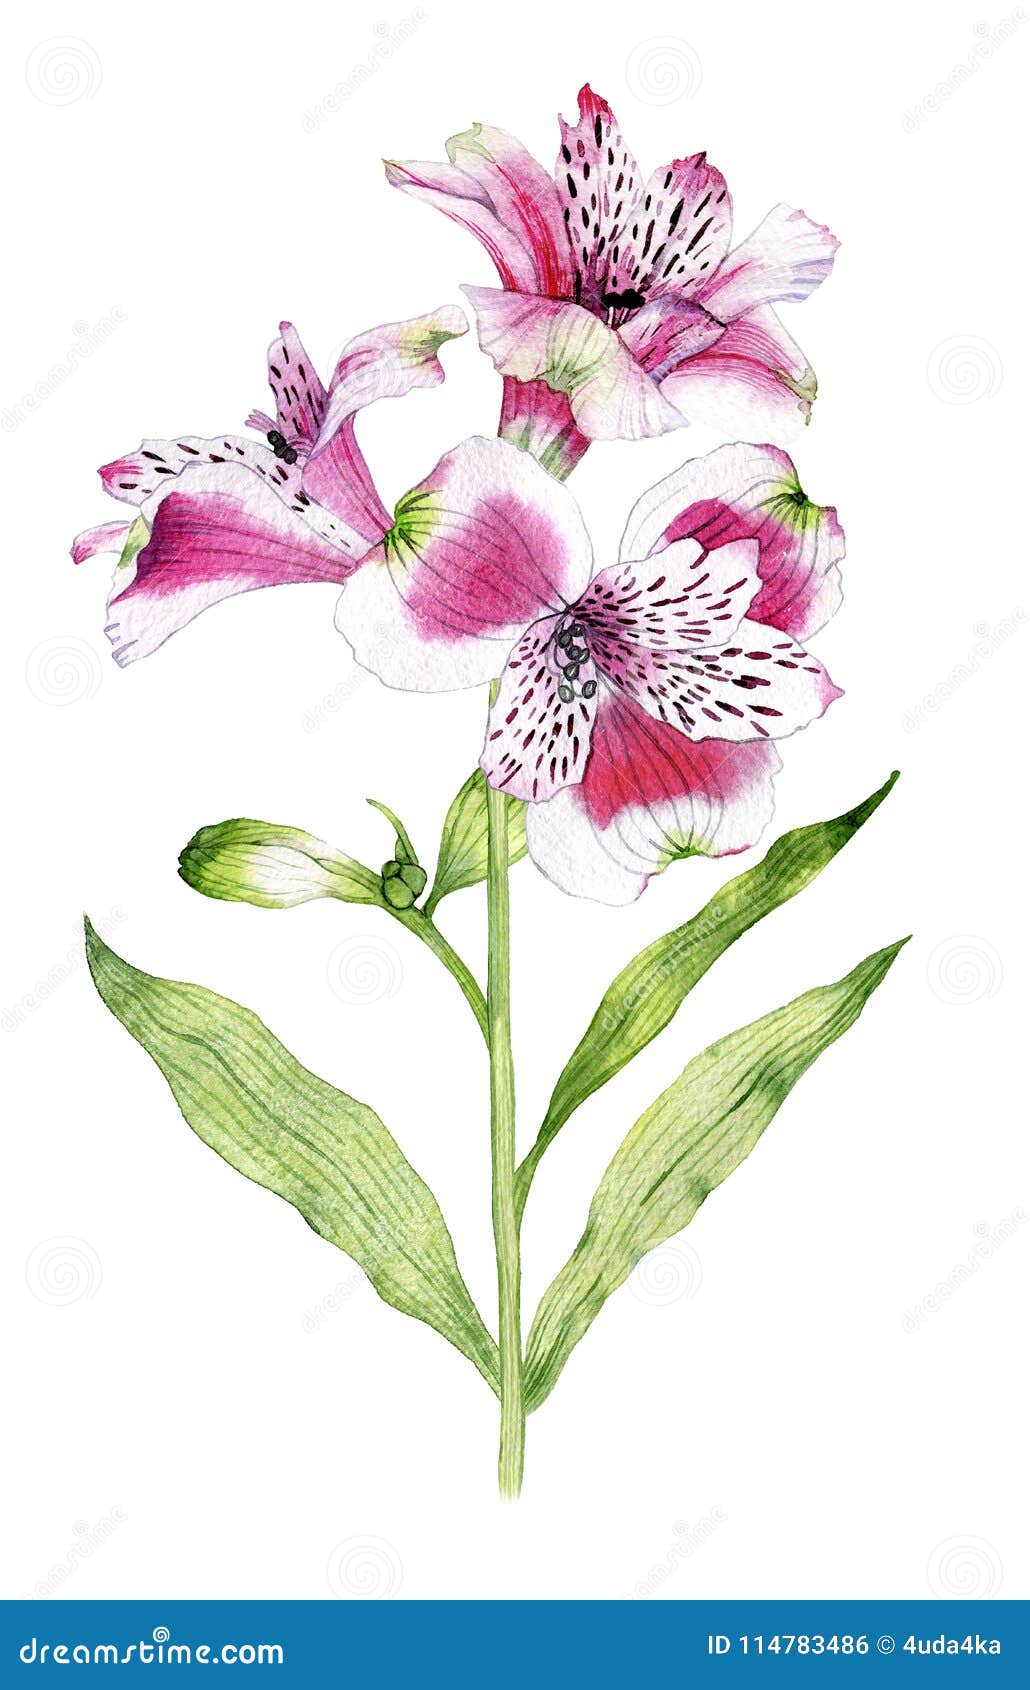 Hand Drawn Watercolor Alstroemeria Flower Stock Illustration ...